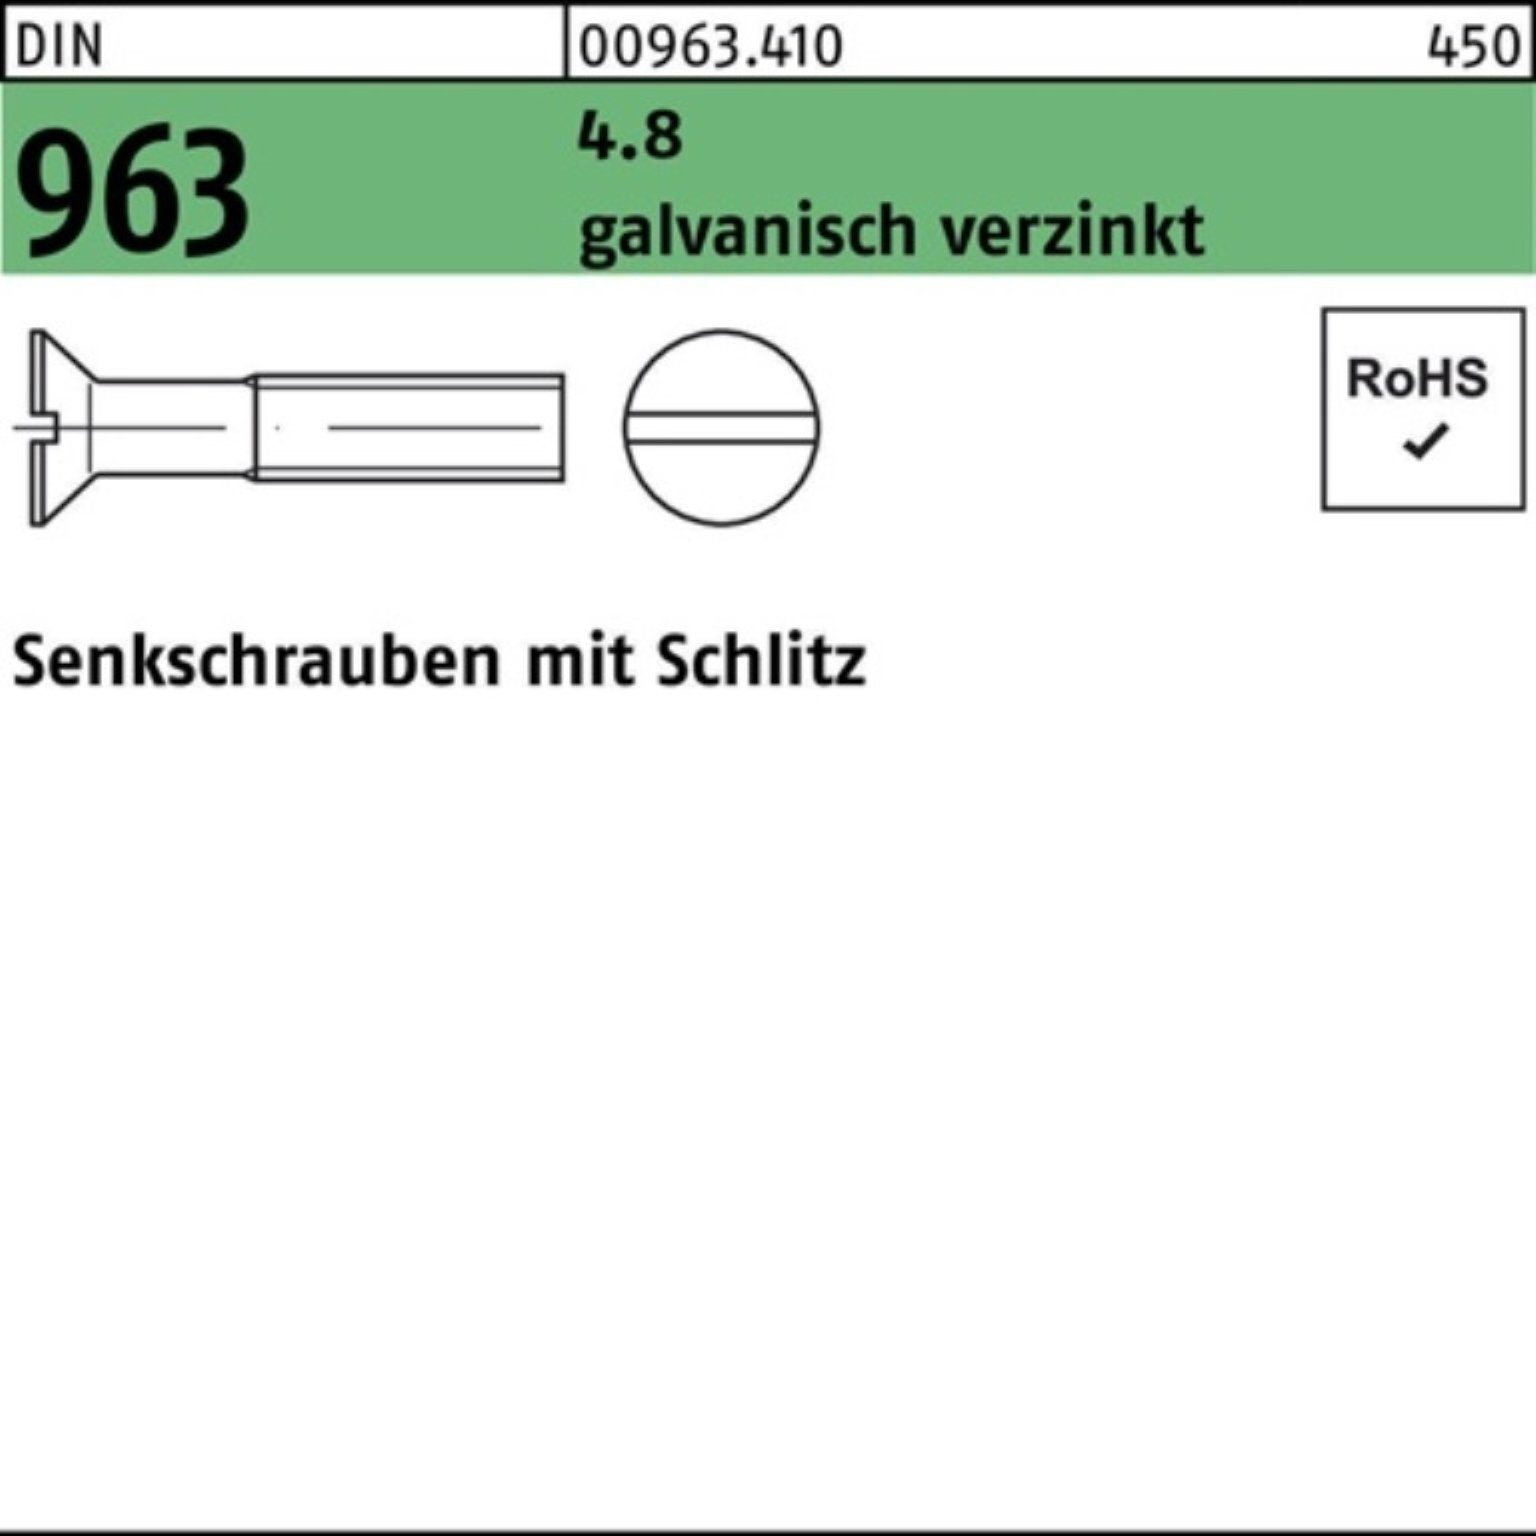 Reyher Senkschraube 100er Pack Senkschraube DIN 963 Schlitz M6x 55 4.8 galv.verz. 100 Stü